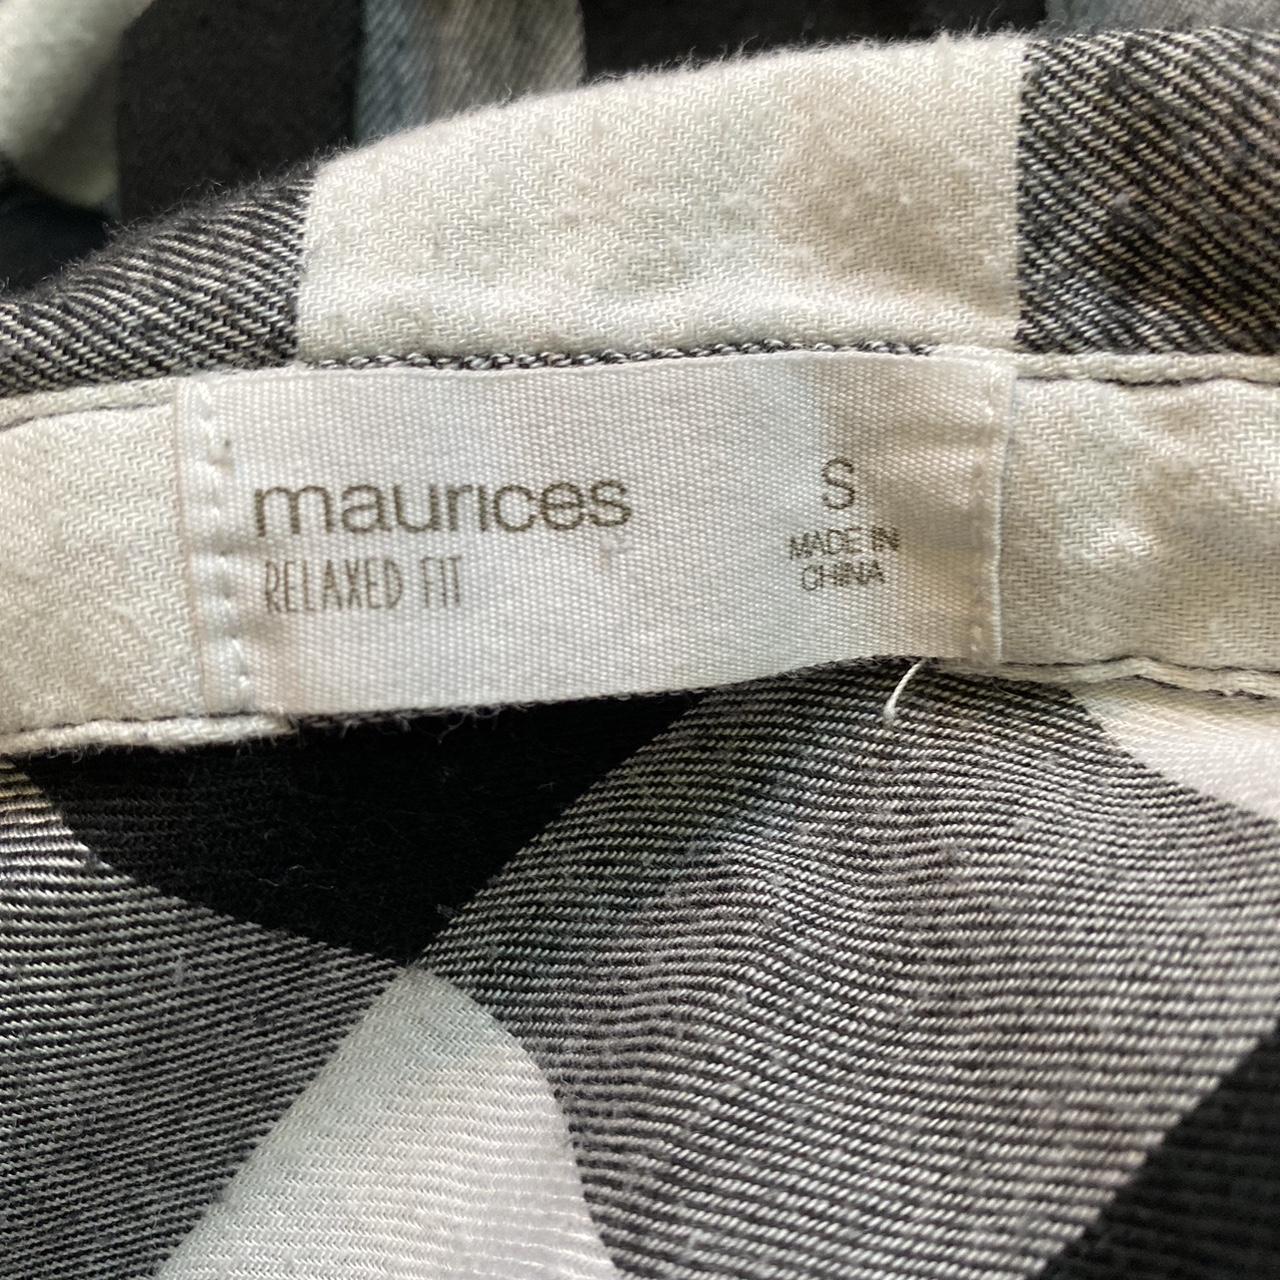 Maurices Large Cotton Spandex Blend Black White - Depop